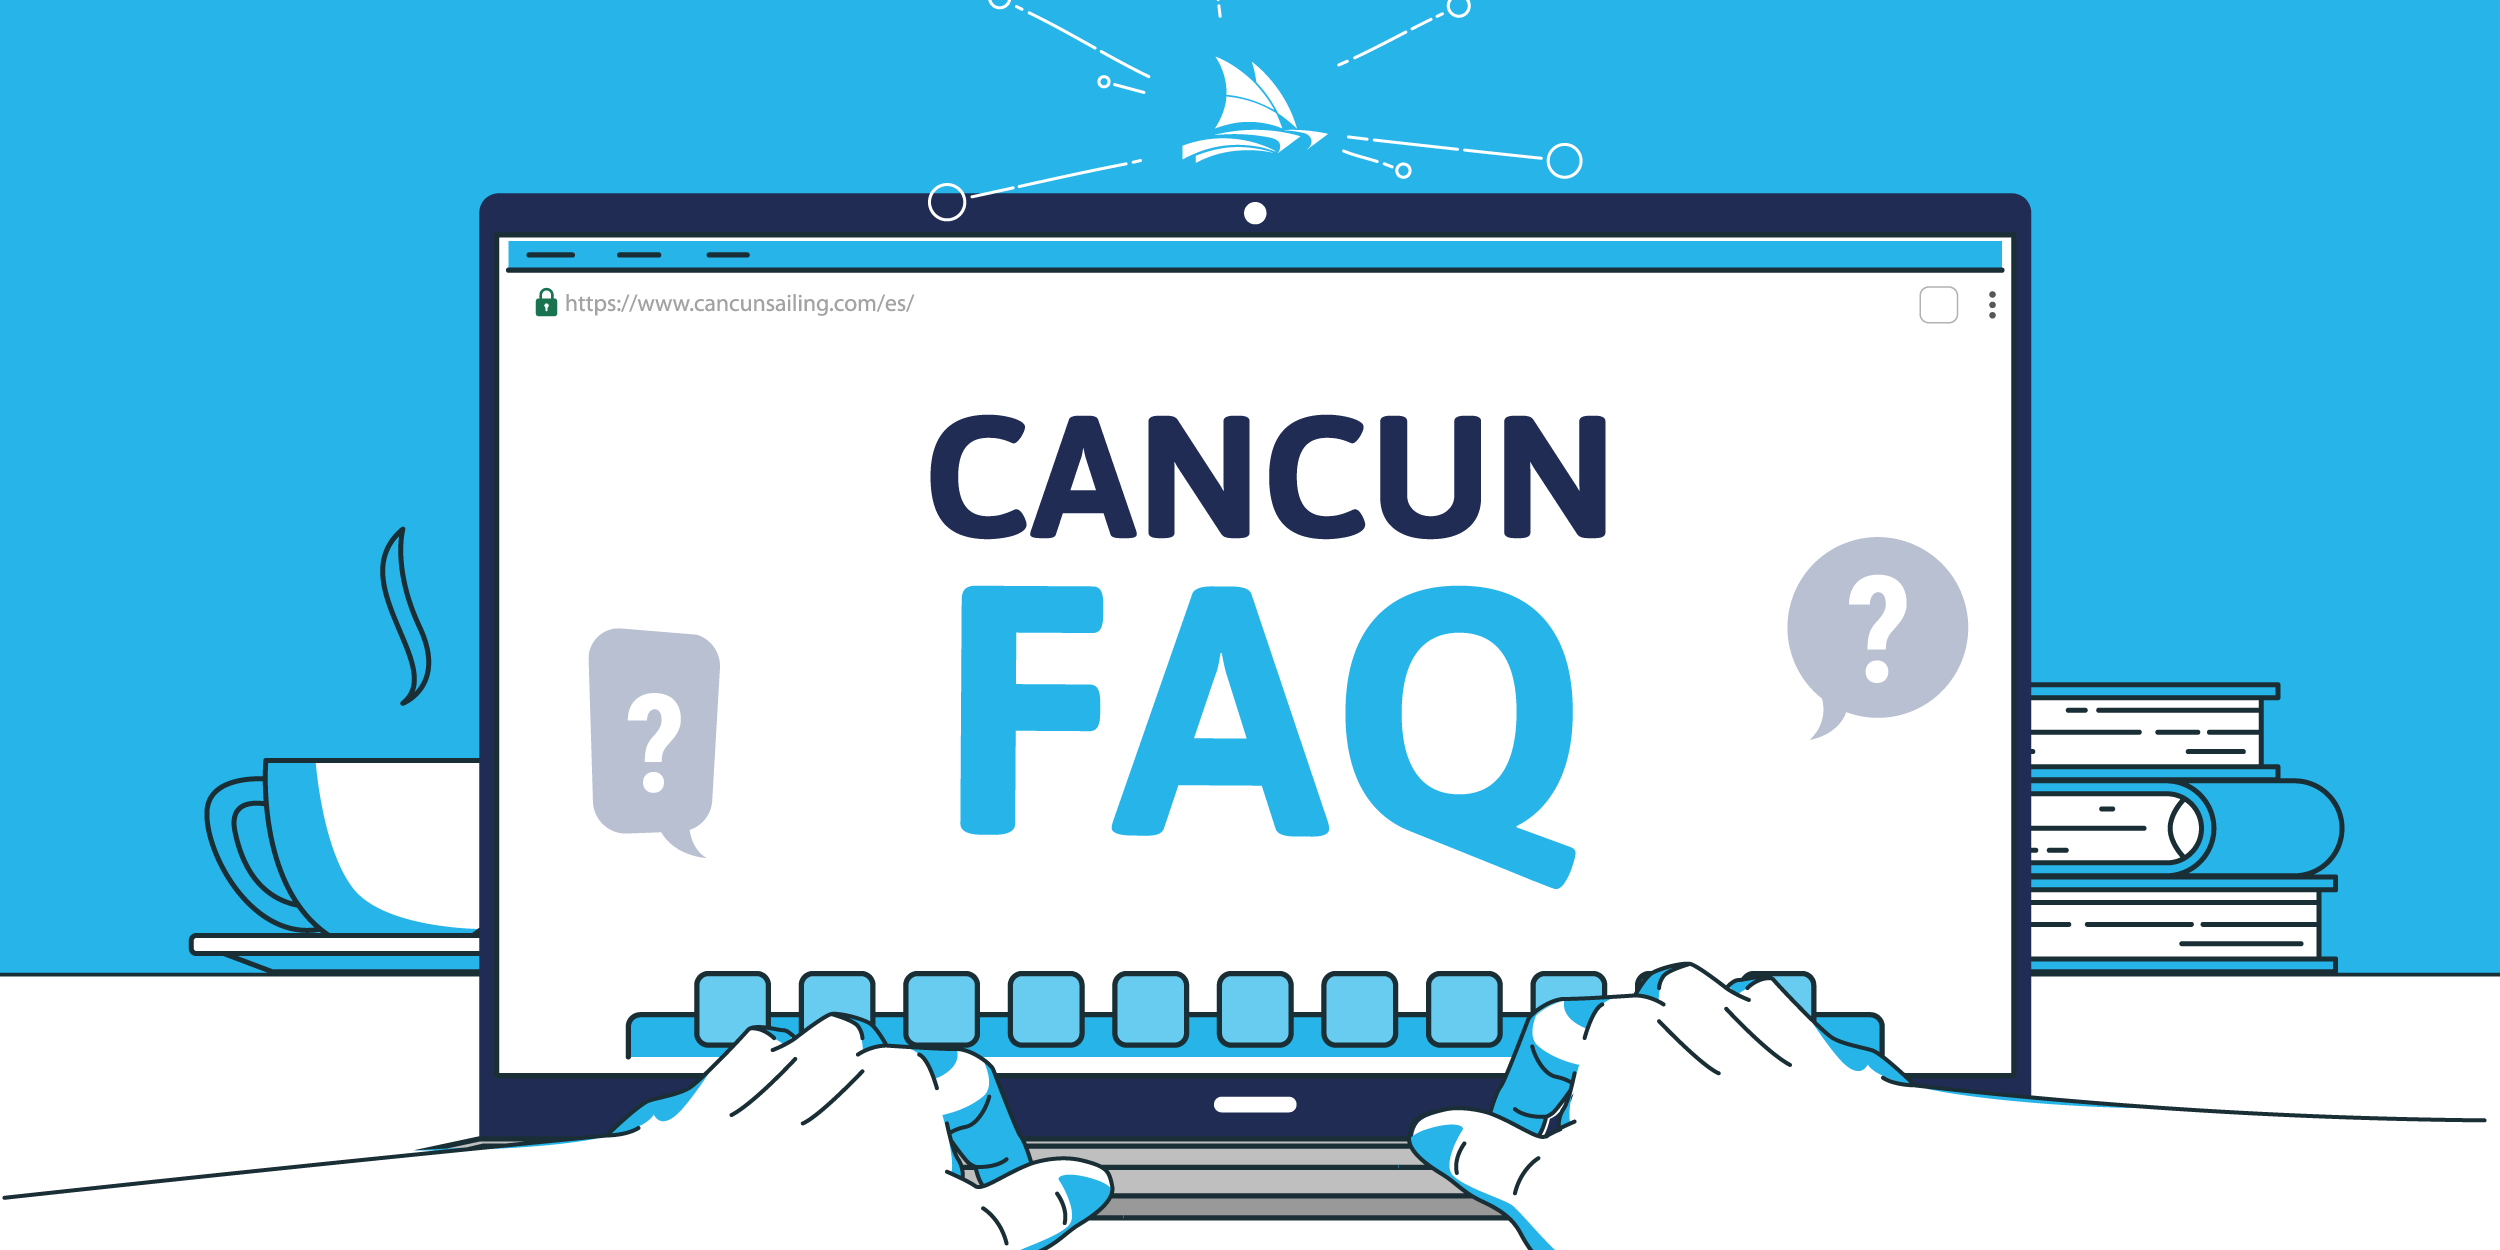 Cancun FAQ